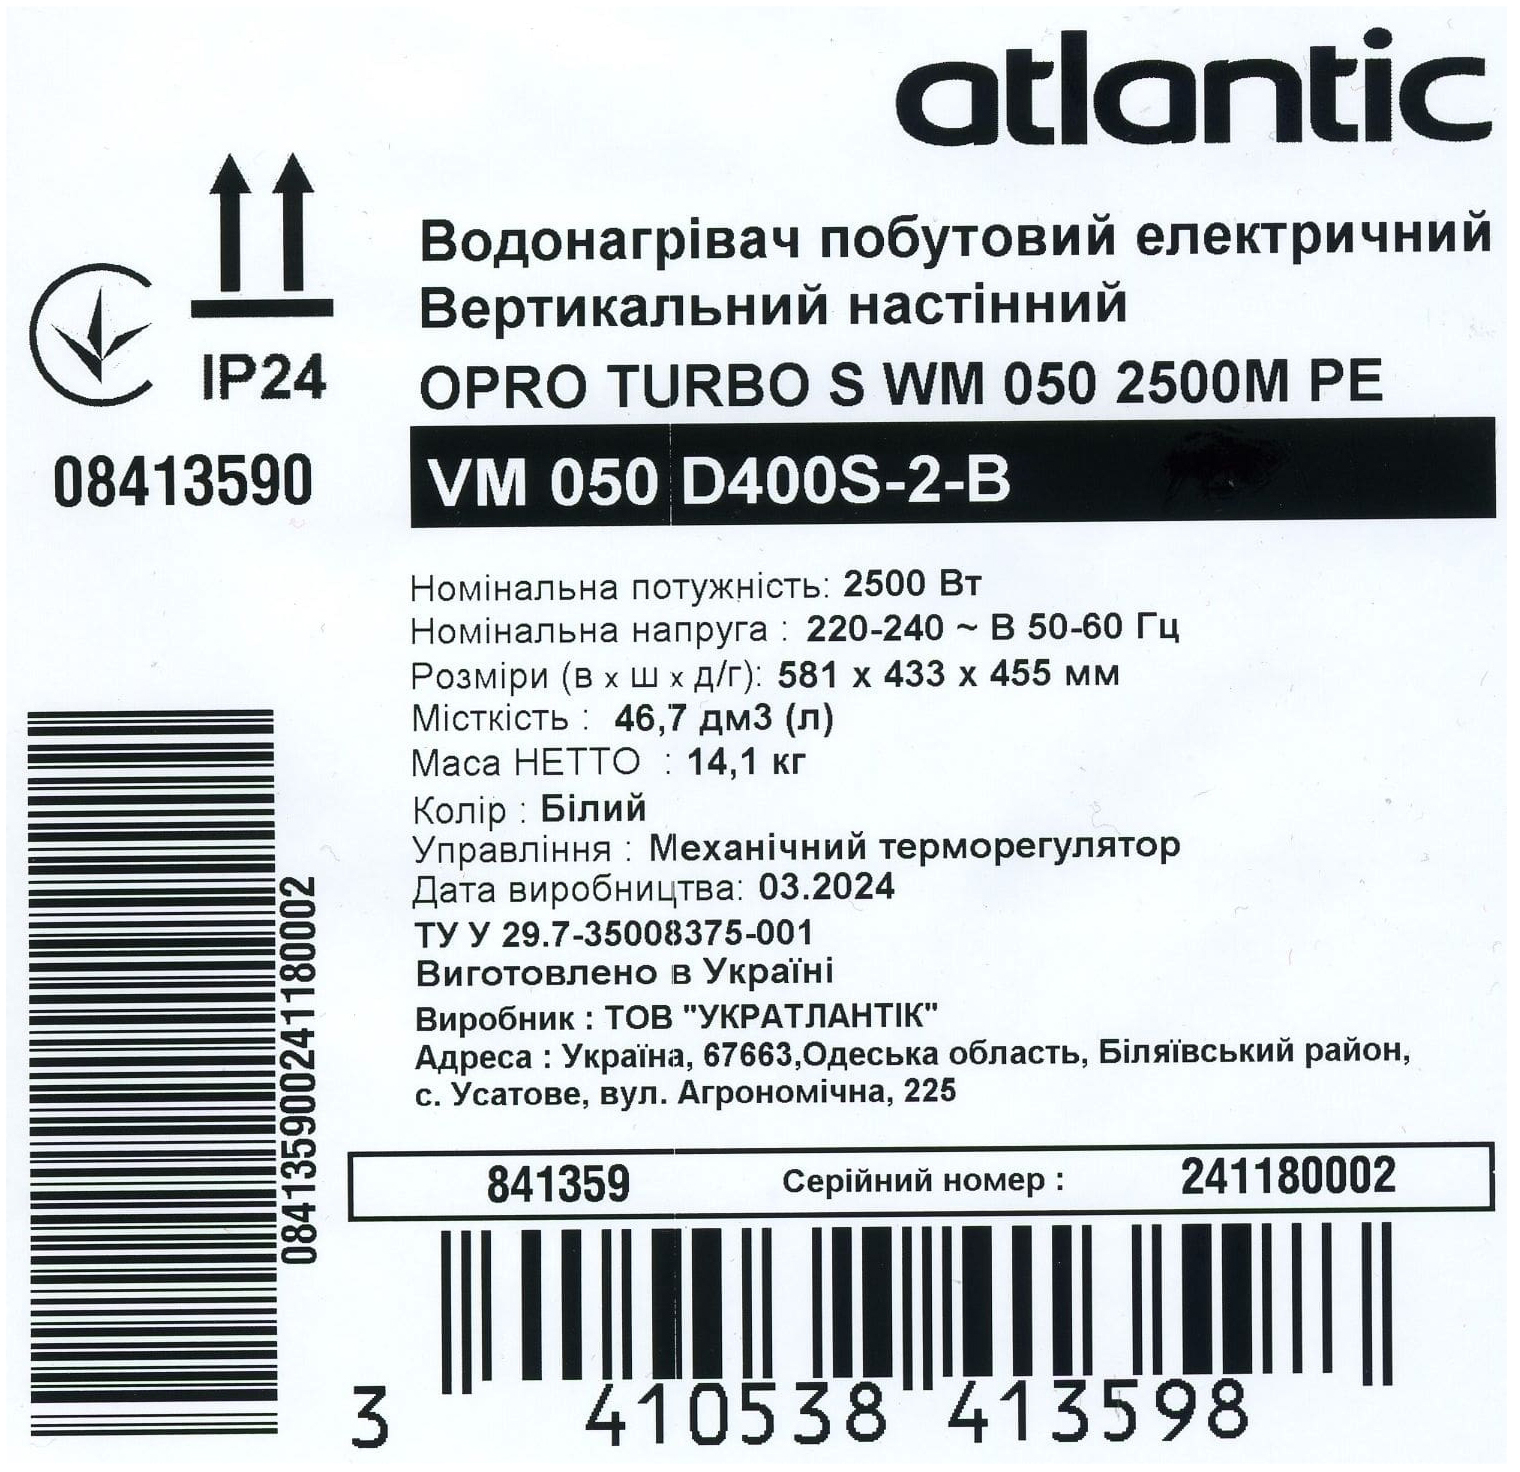 Atlantic Opro Turbo VM 050 D400S-2-B (2500W) в магазине в Киеве - фото 10